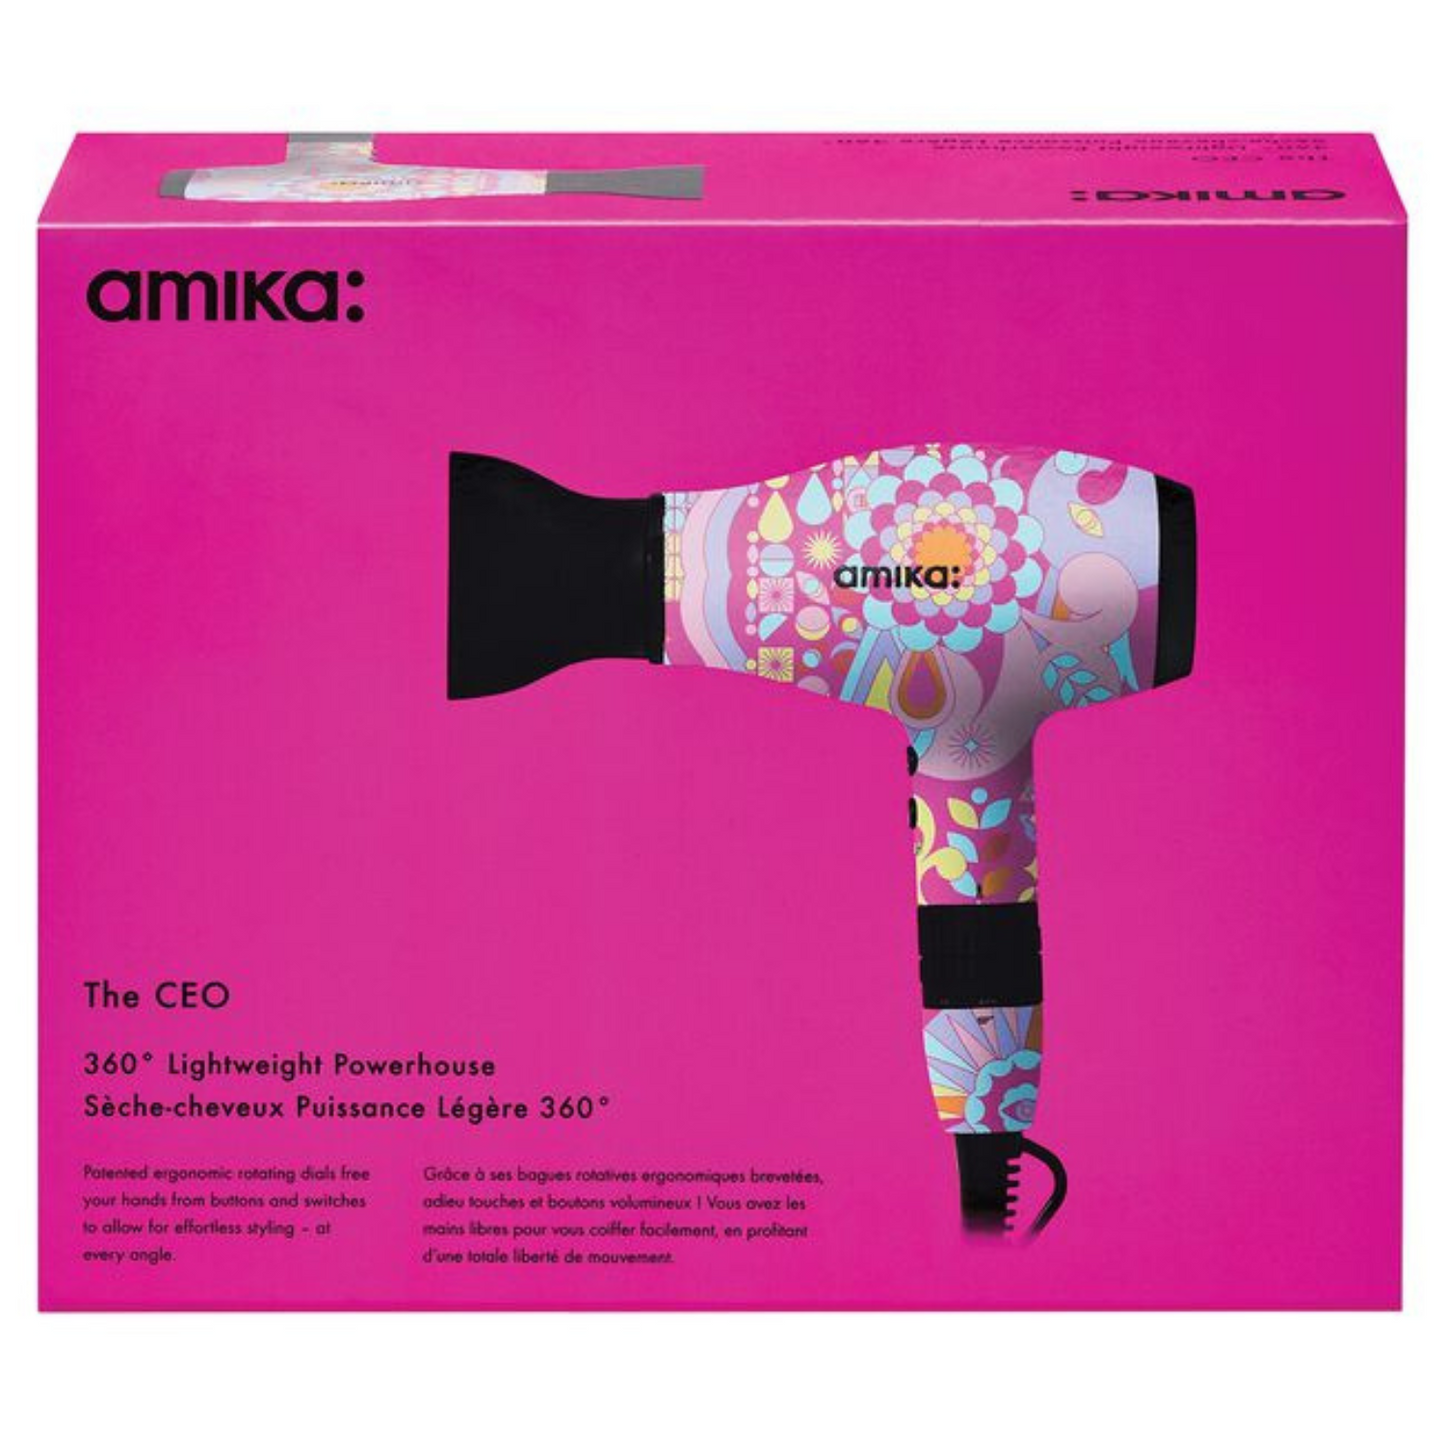 amika - The CEO 360 Lightweight Powerhouse Dryer